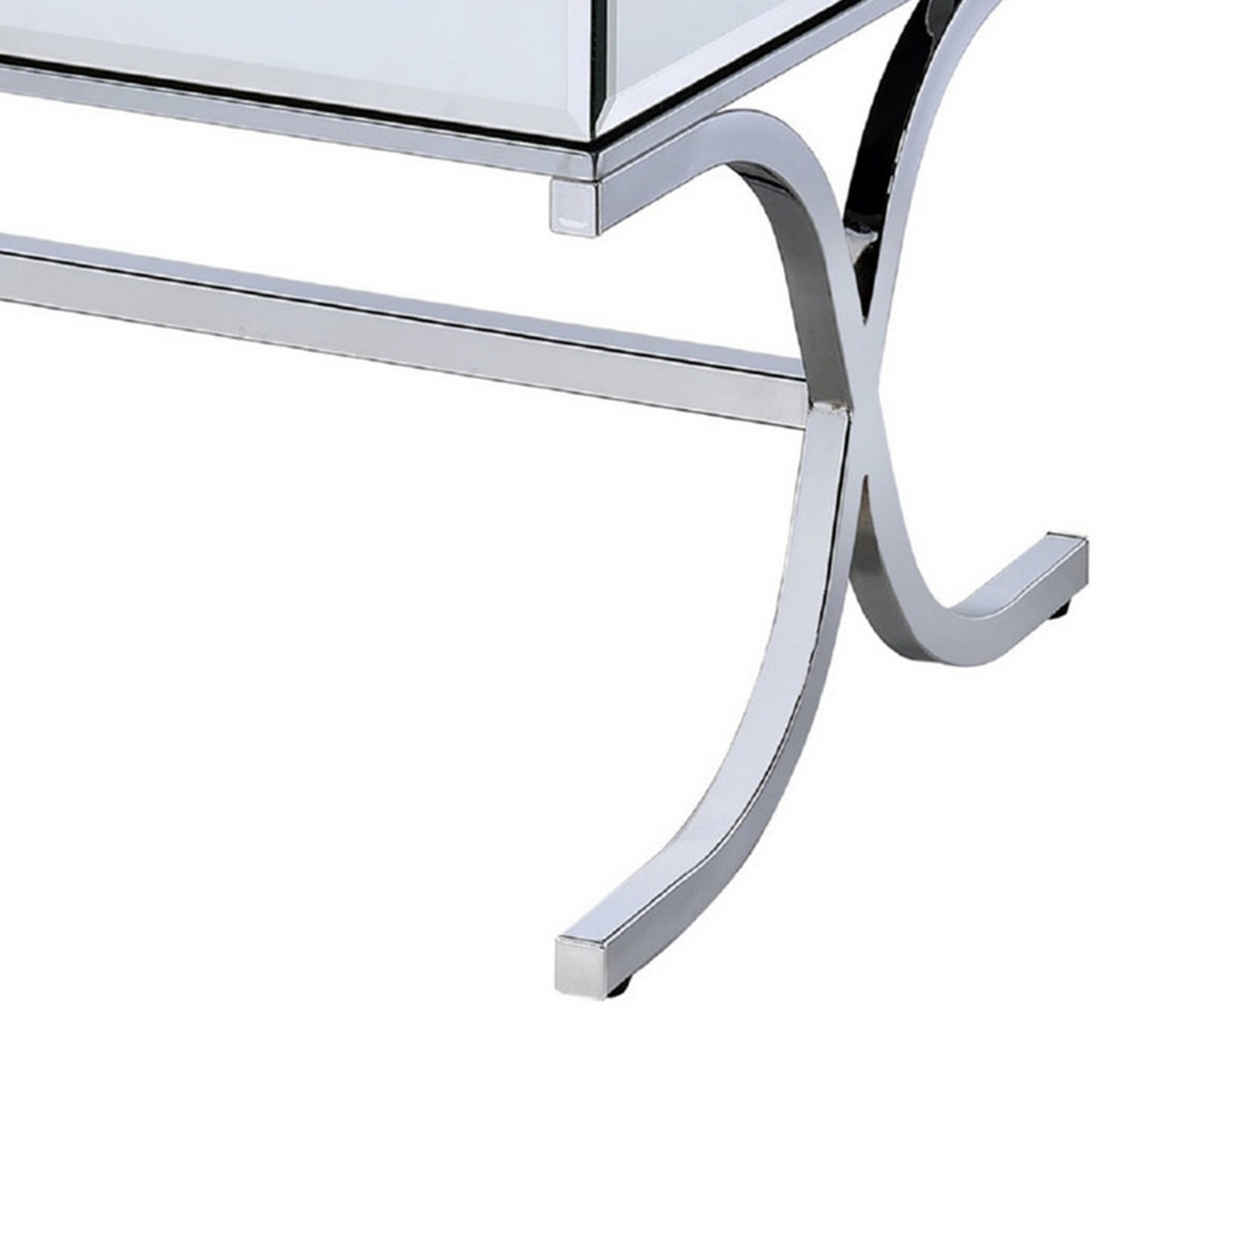 42 Inch Rectangular Coffee Table, Mirrored, X Shaped Metal Legs, Silver- Saltoro Sherpi